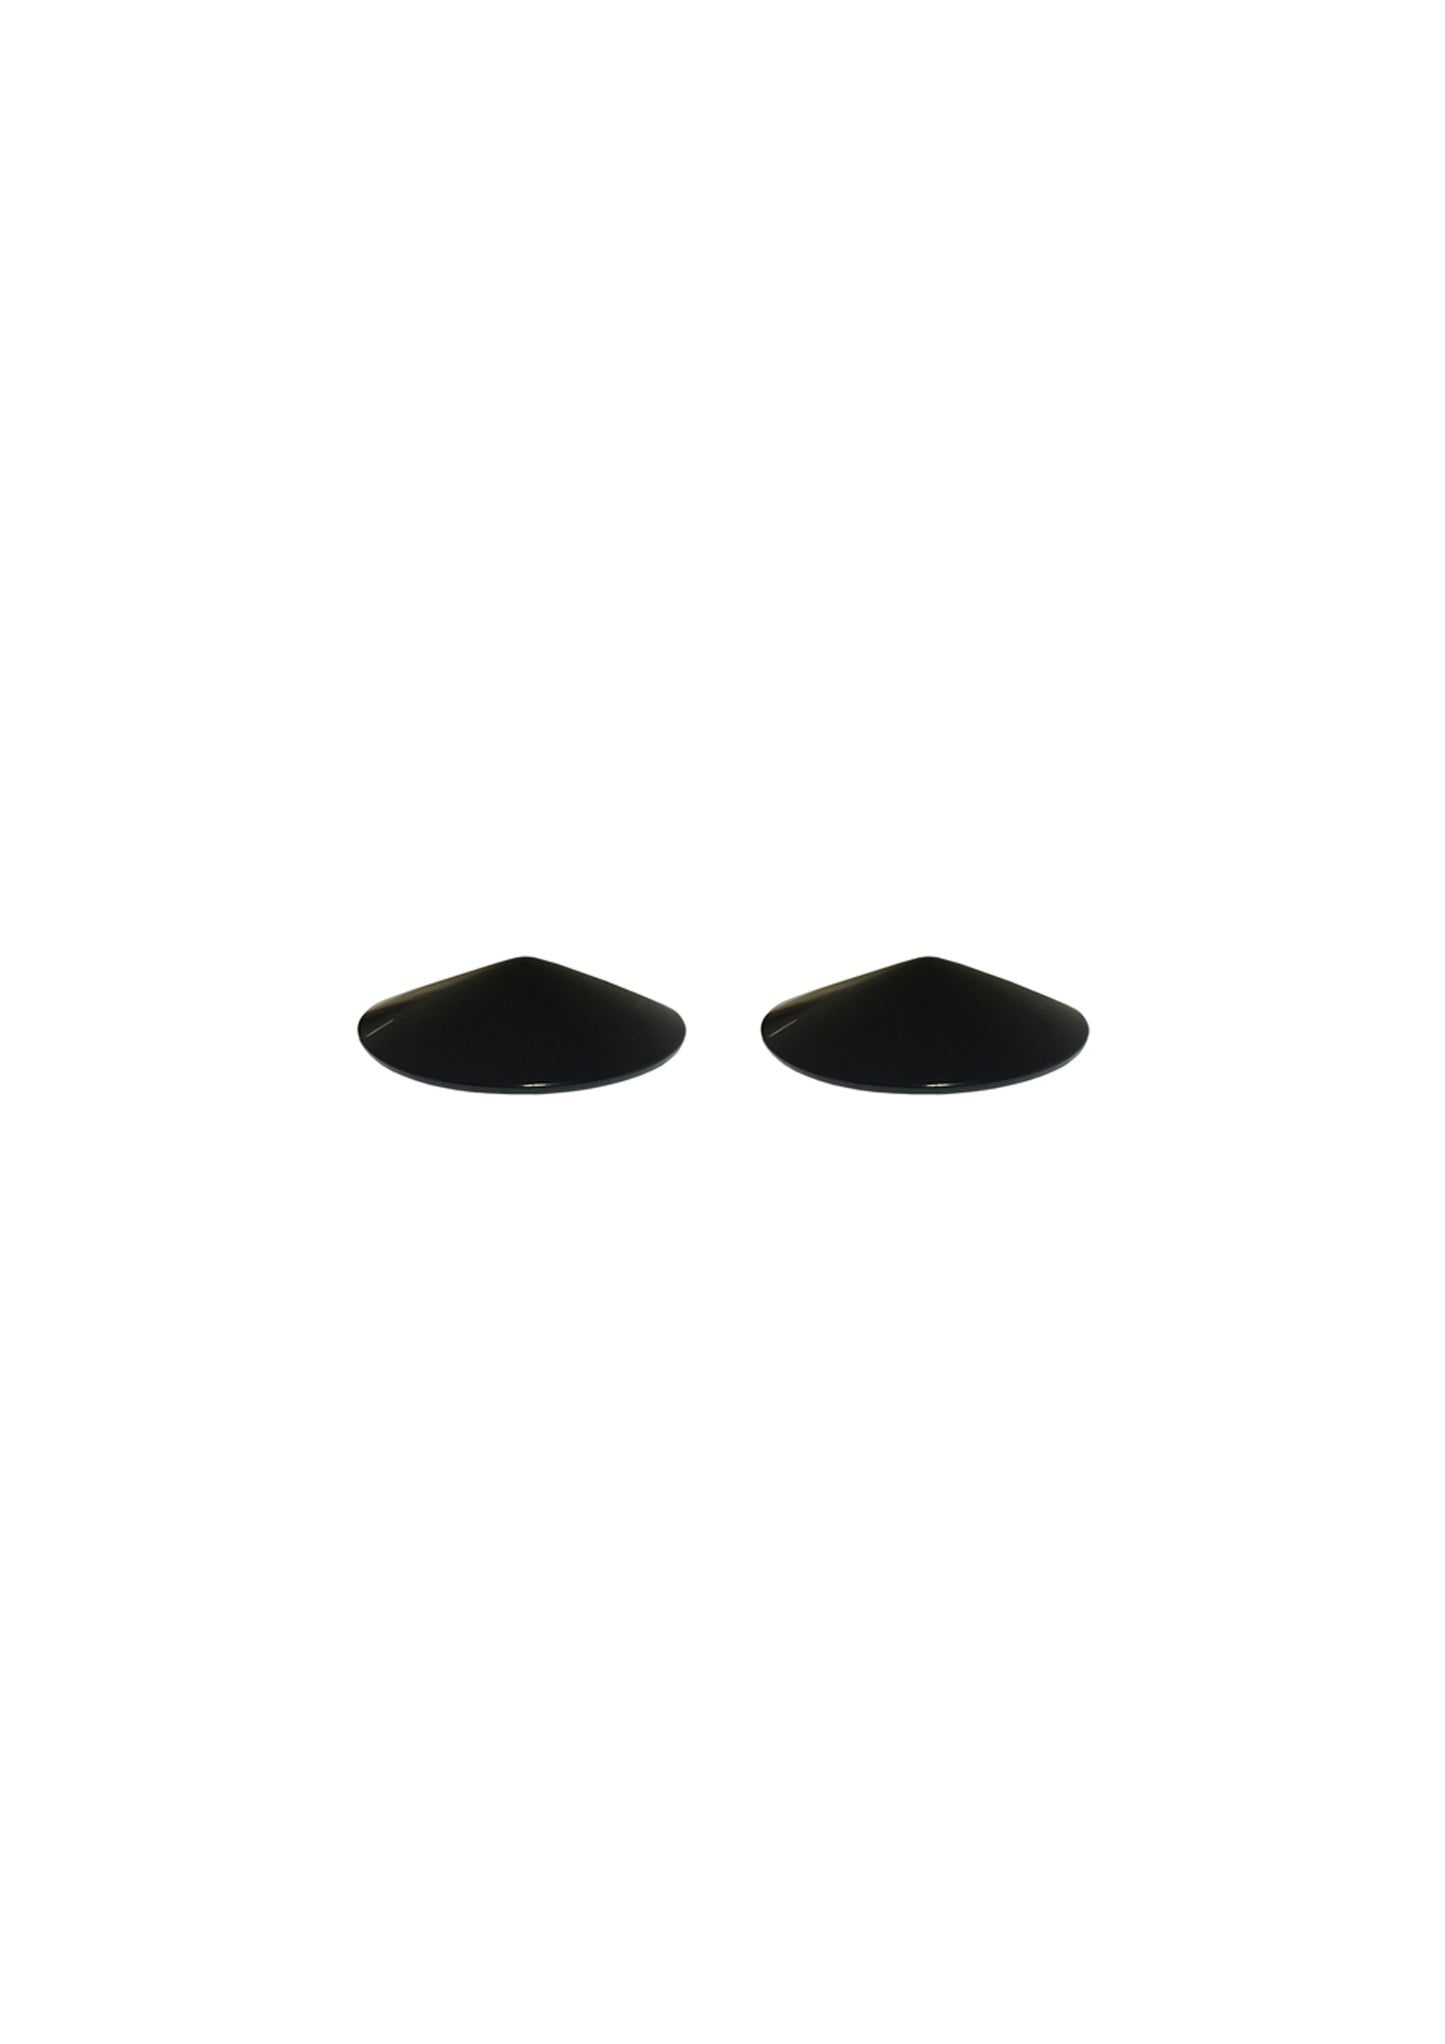 Black Acrylic Nipplets